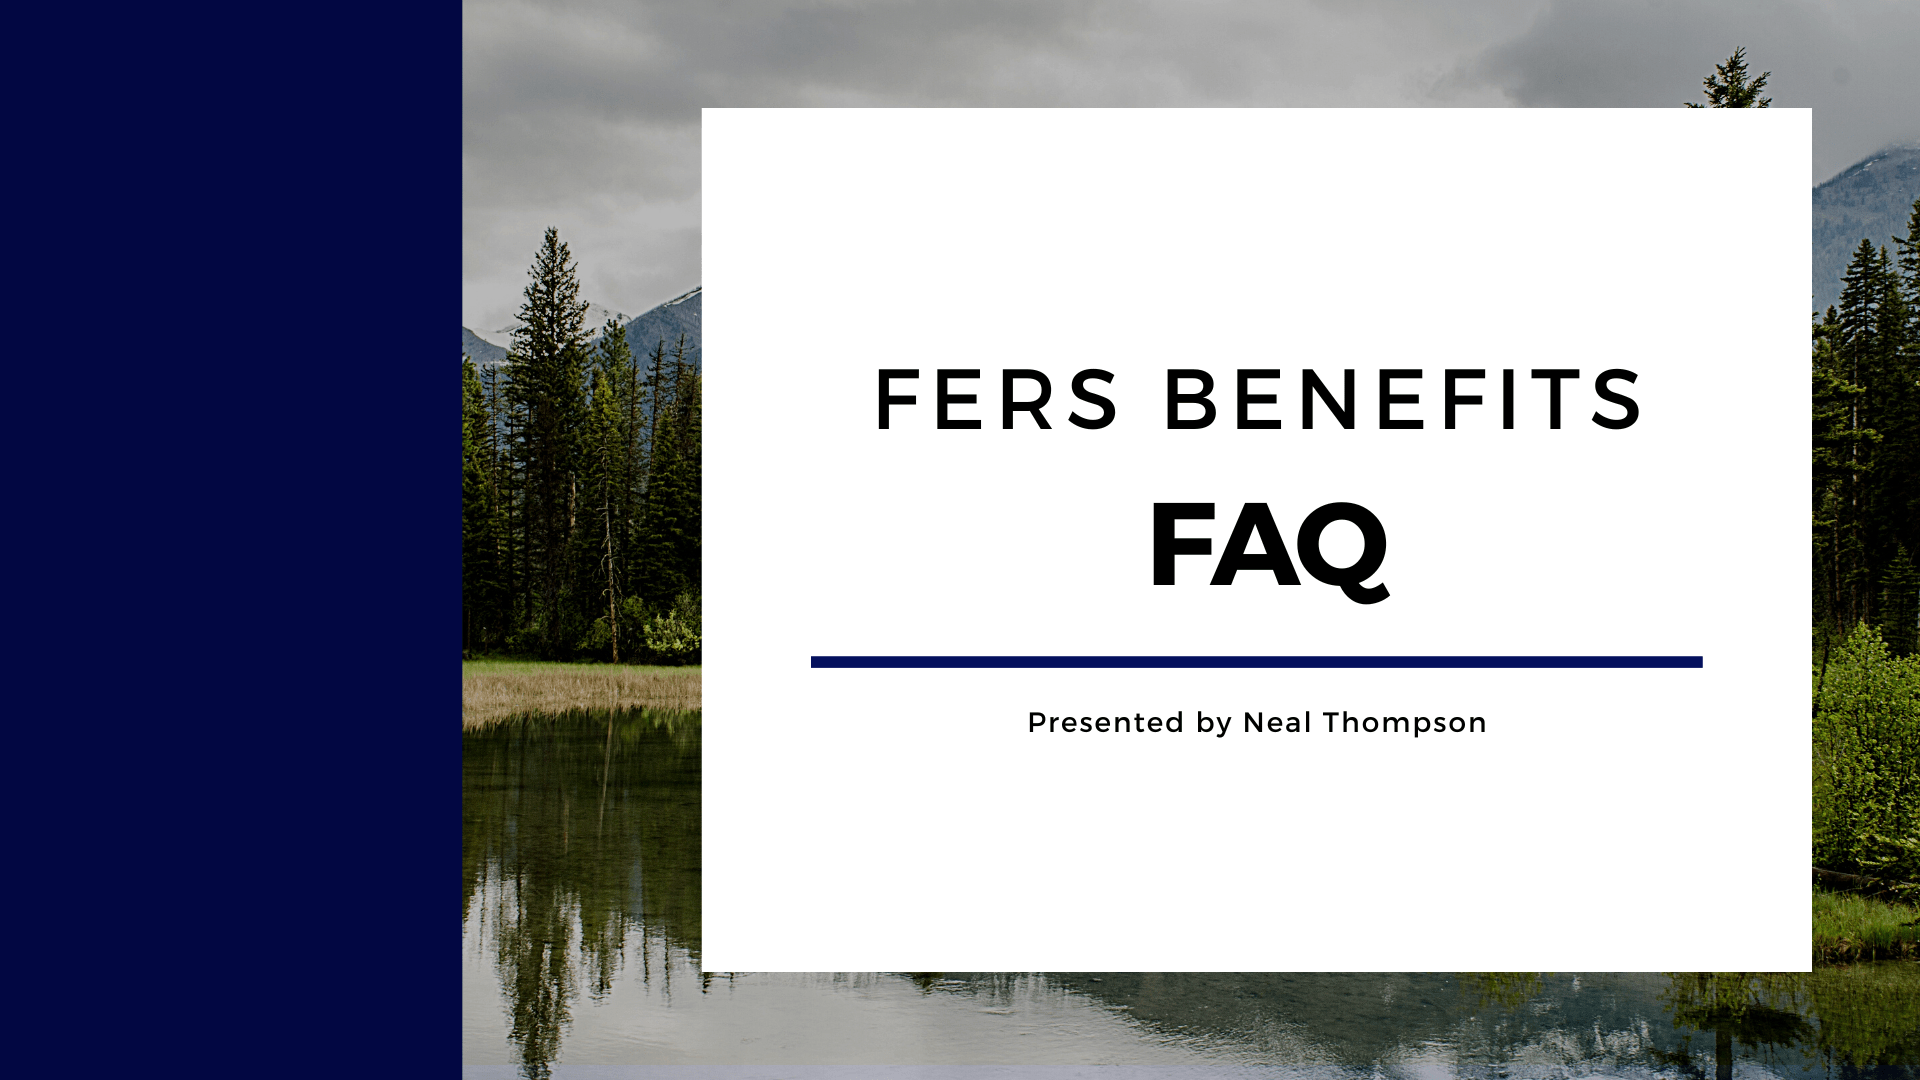 Federal Benefits FAQ